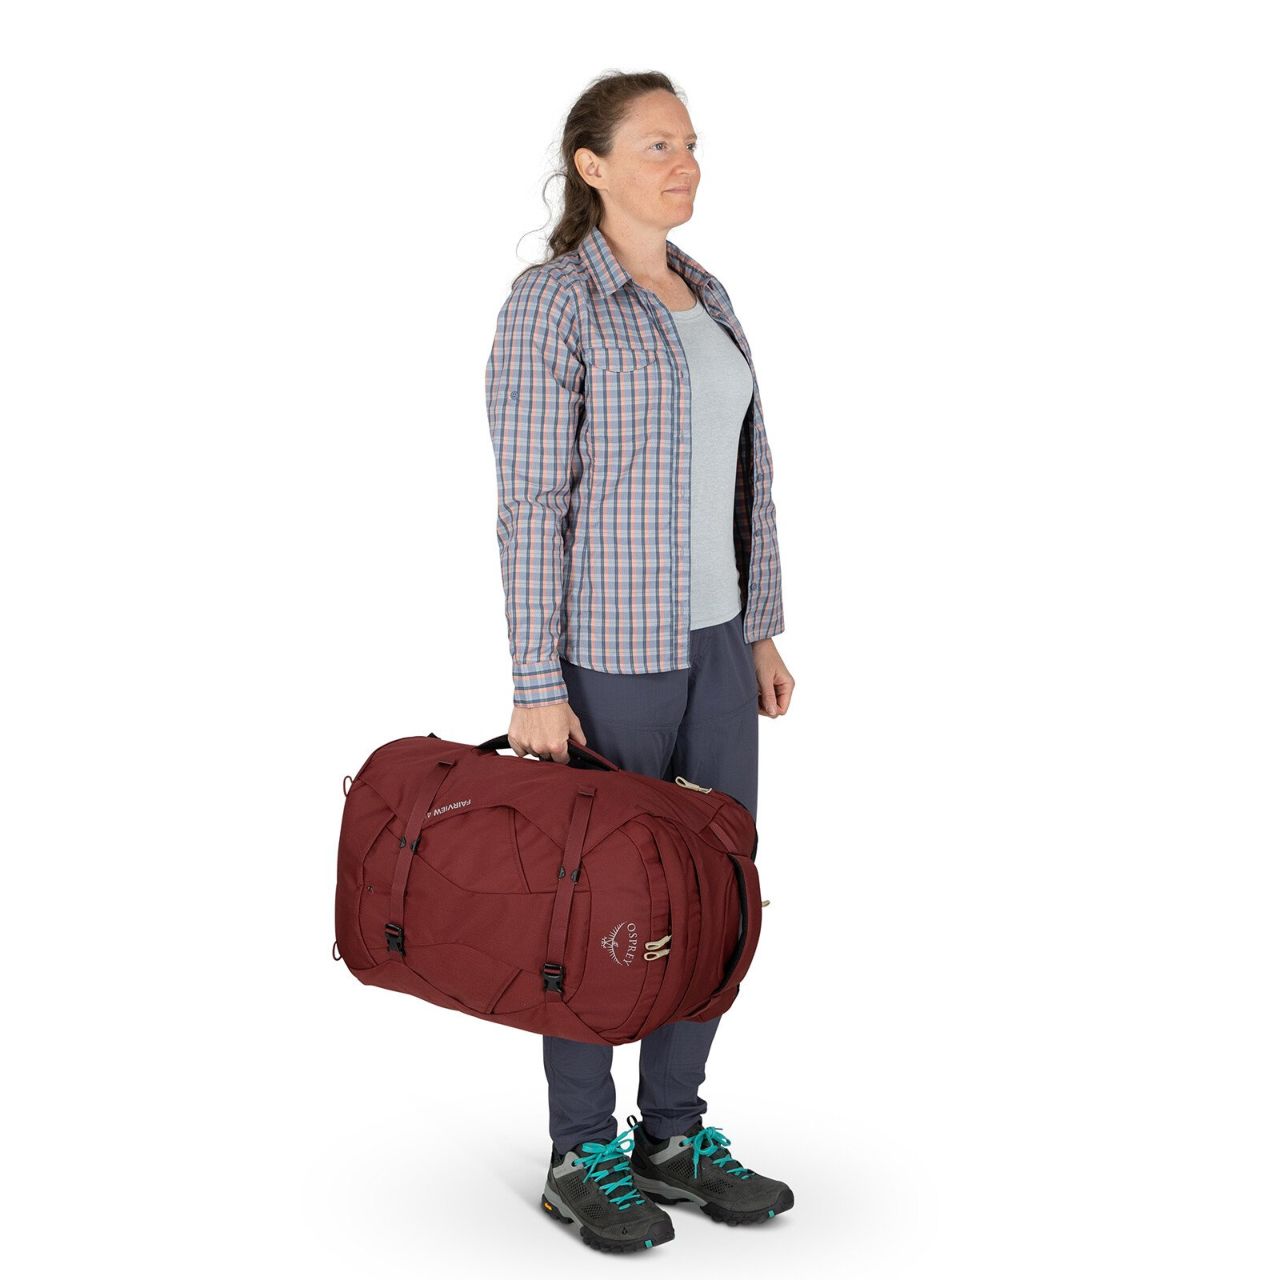 Farpoint 40 Travel Pack - Men's Trekking Carry-On Backpack